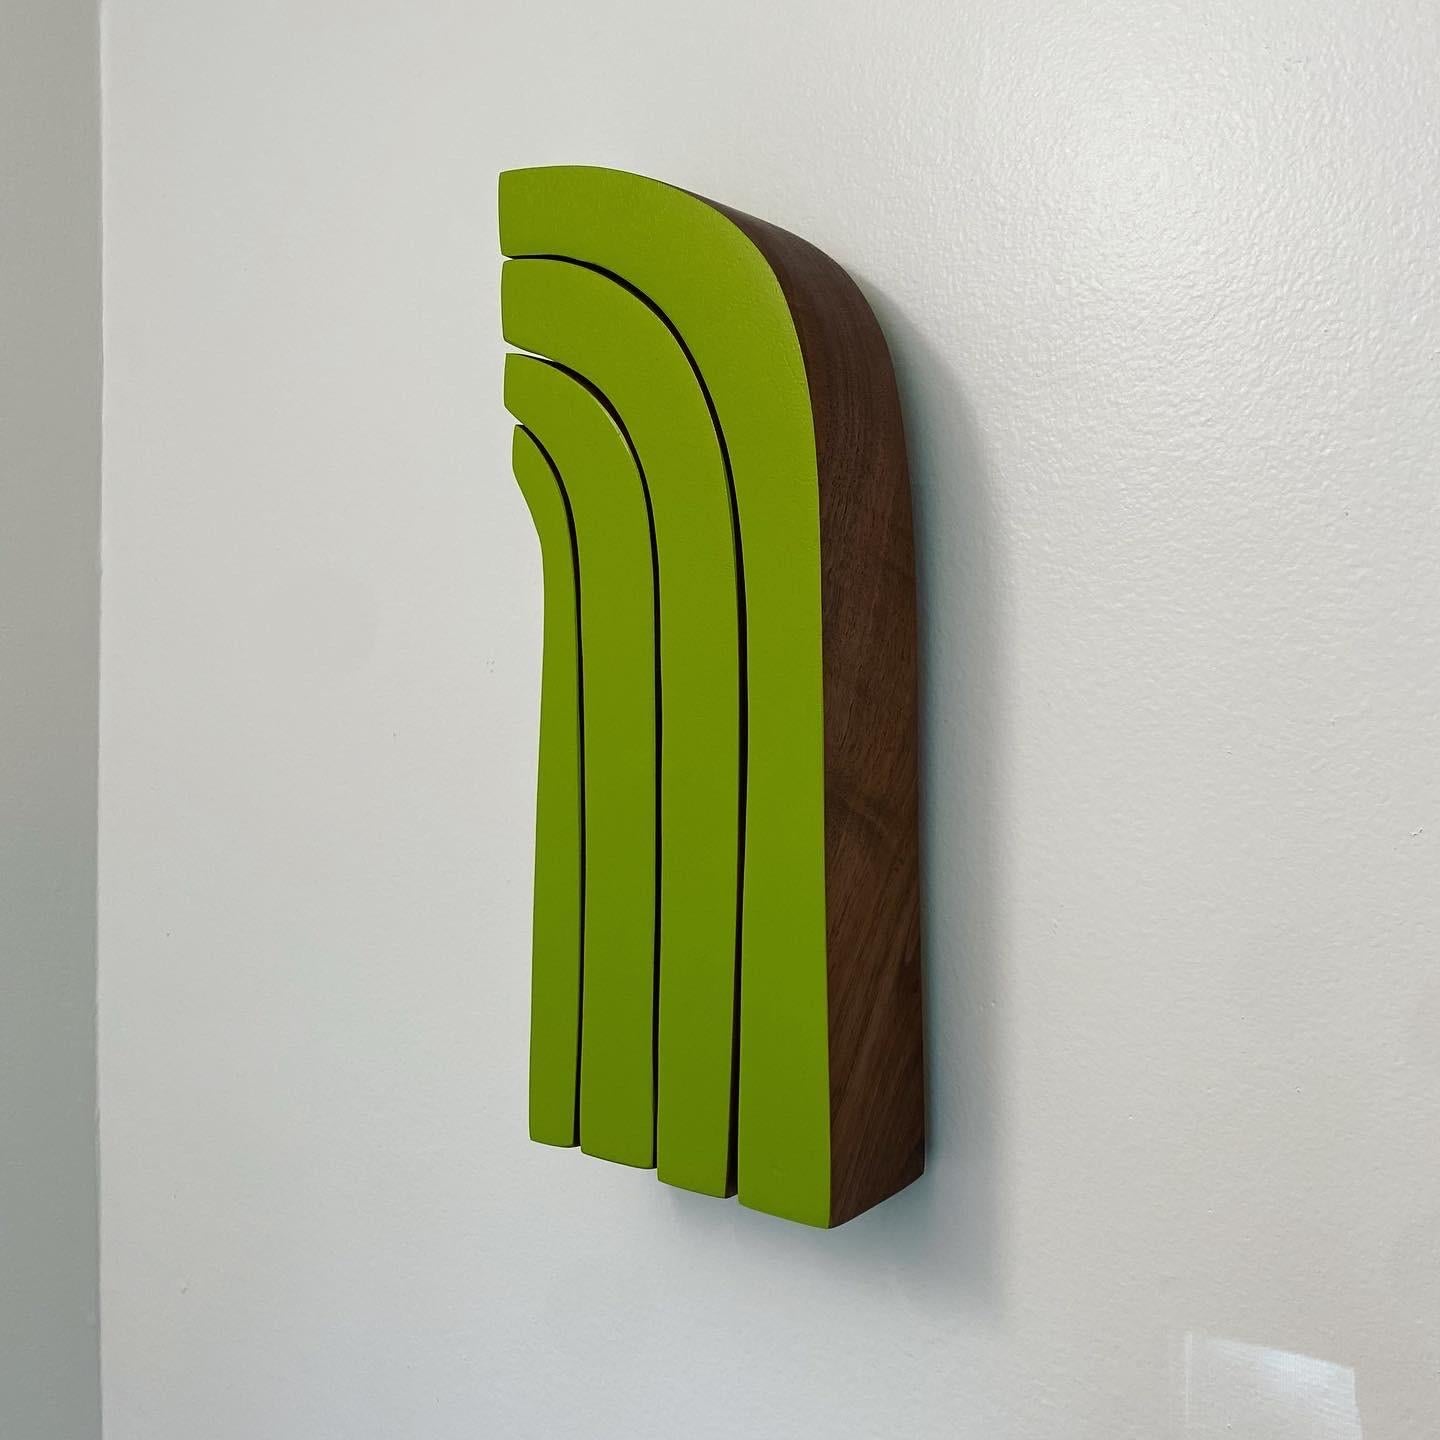 Scott Troxel Abstract Sculpture - "Bend" Wall Sculpture-wood, green, minimalism, mid century modern, brown, lime